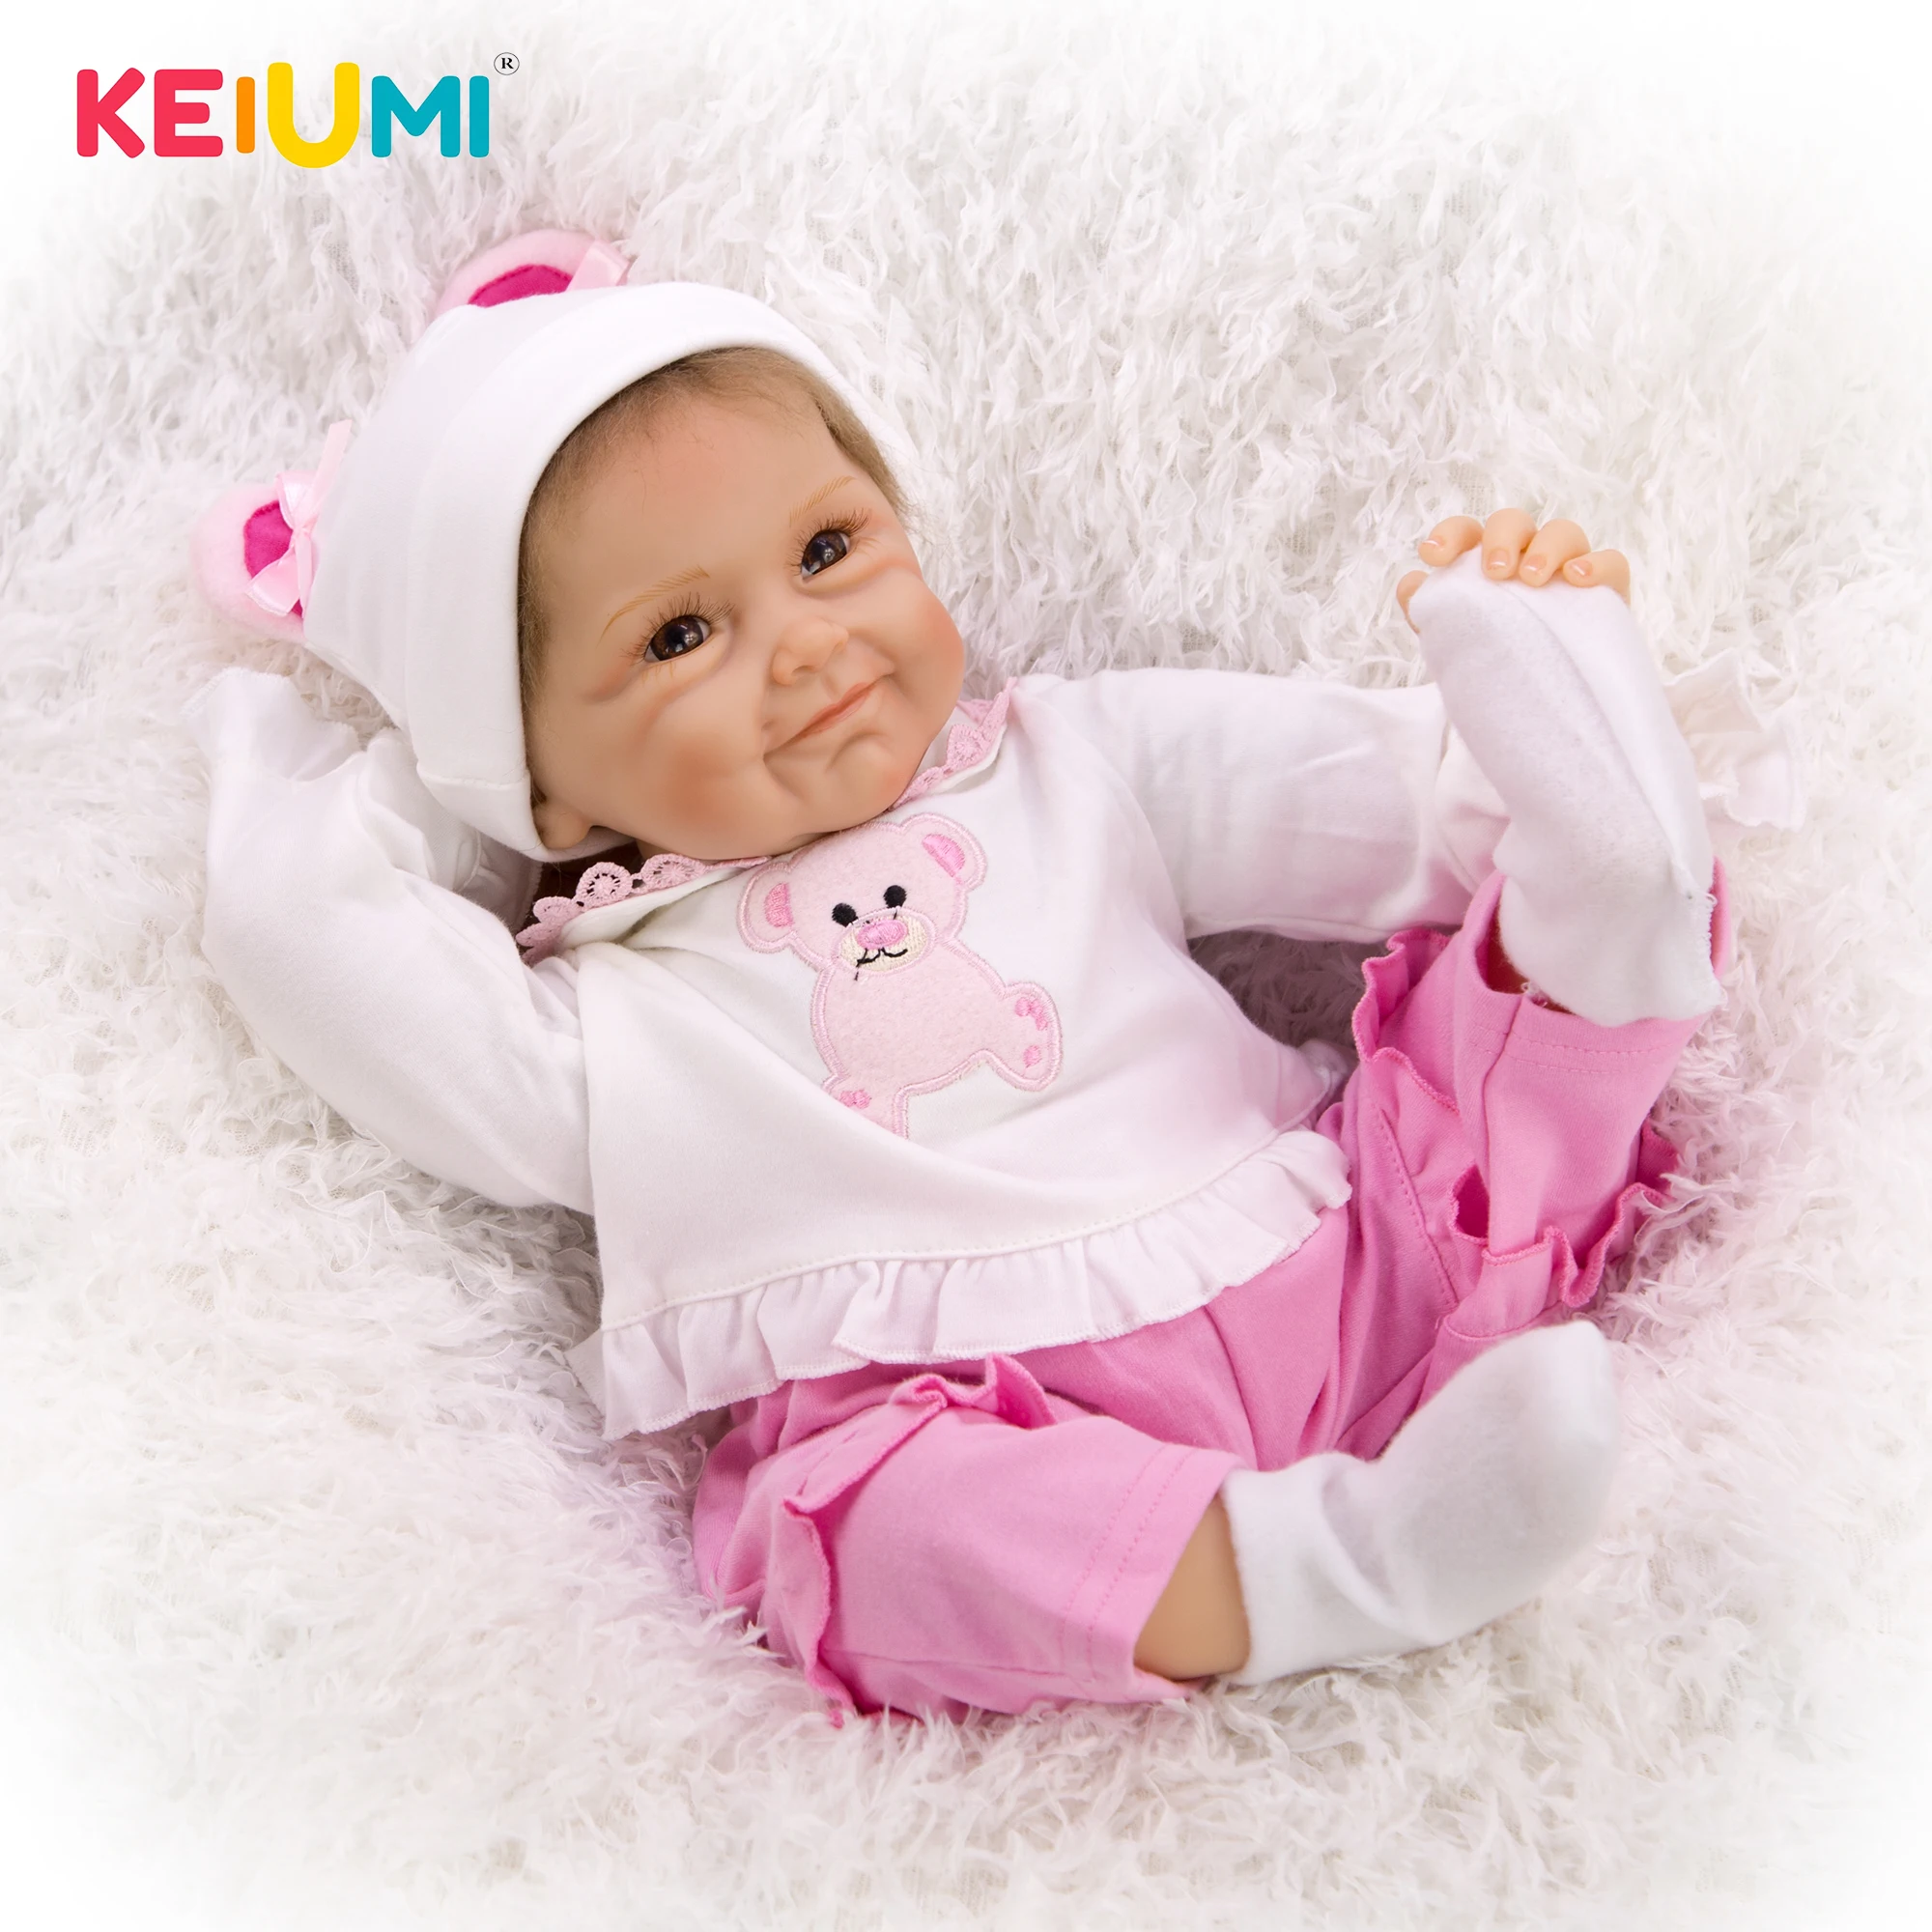 

KEIUMI Baby Reborn Toy 22 Inch 55 cm Soft Silicone Vinyl Girl Doll Lifelike Reborn Baby Doll Cloth Body For Kid Christmas Gift